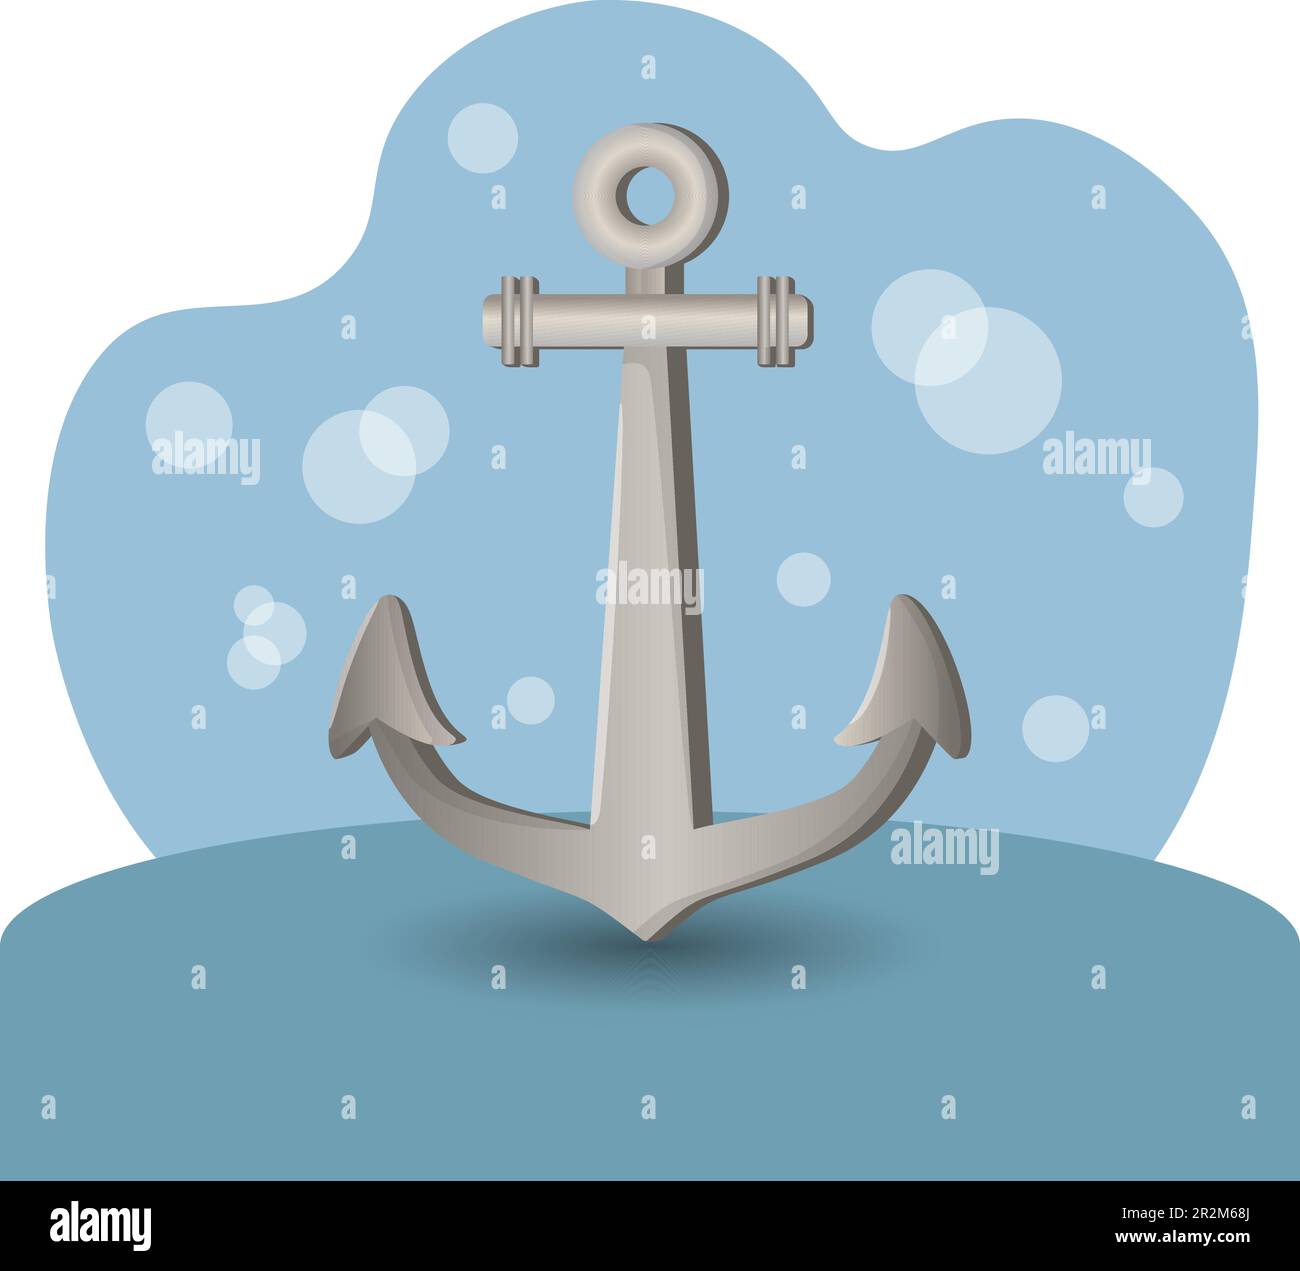 Anchor illustration. Steel, hook, underwater, equipment. Editable vector graphic design. Stock Vector